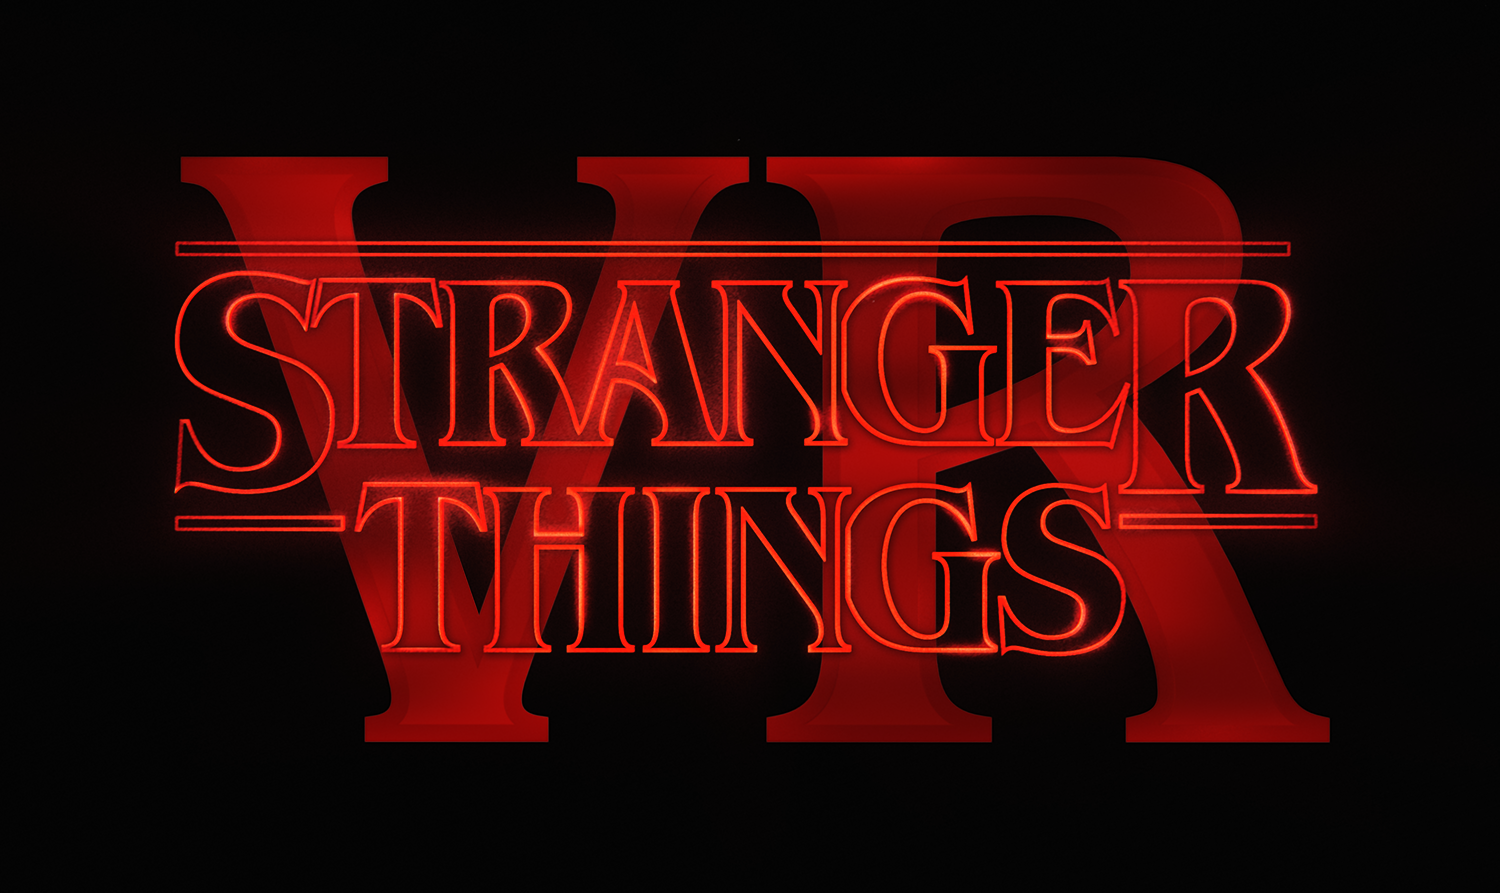 Stranger Things - Wikipedia